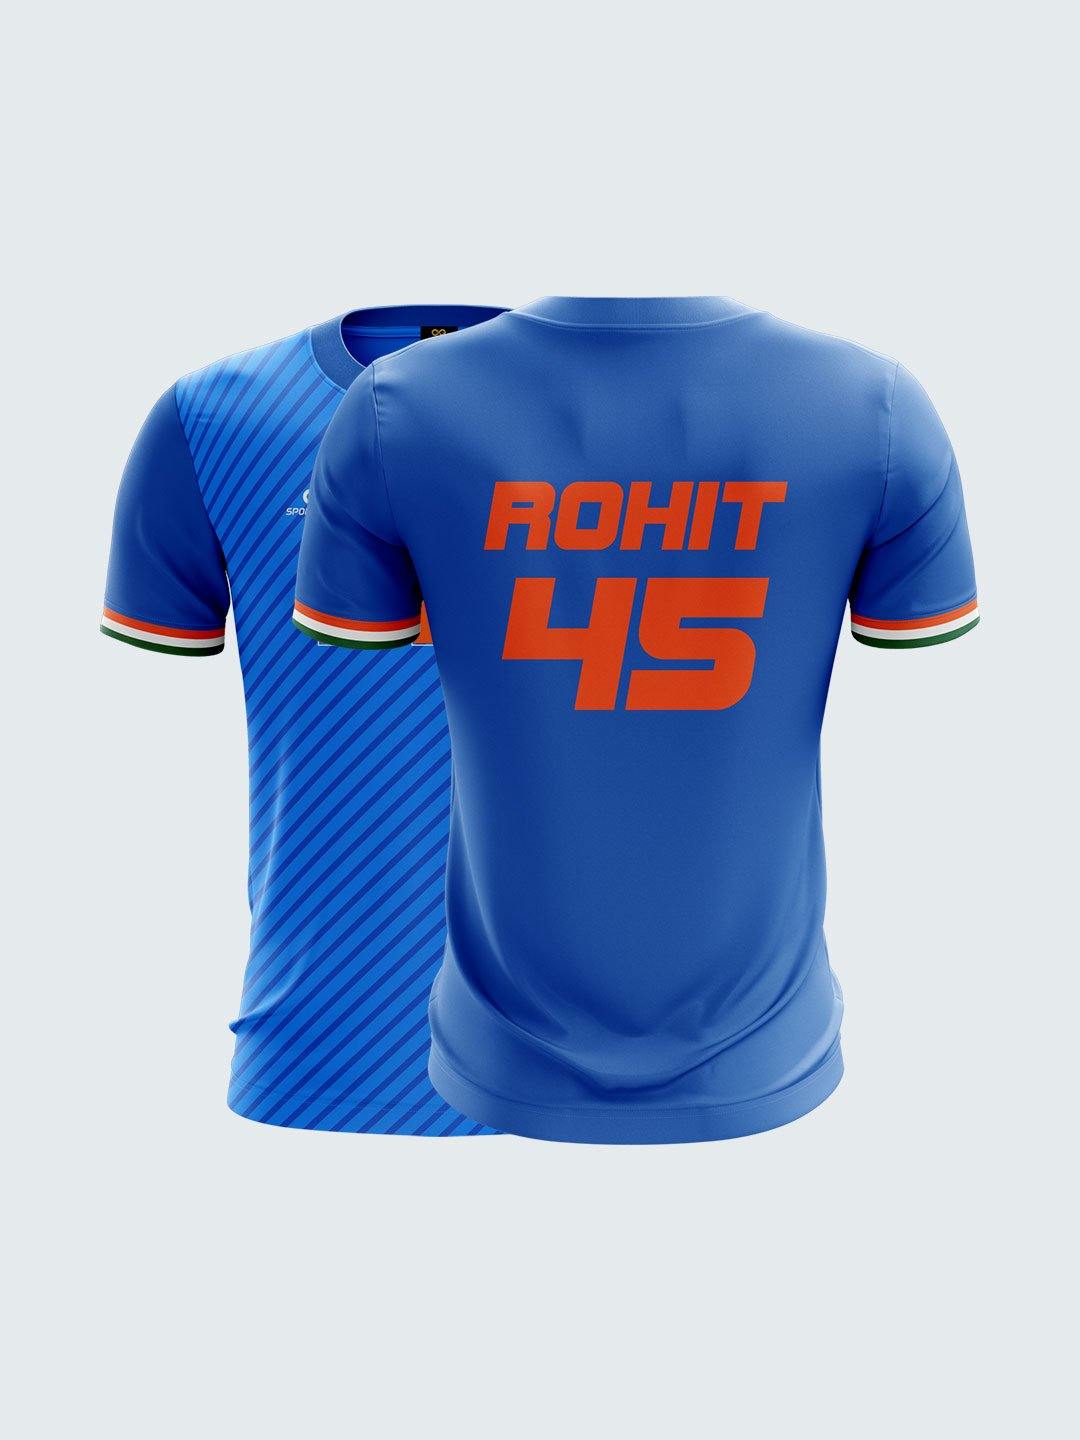 T20 India Blue Concept Rohit Sharma Fan 